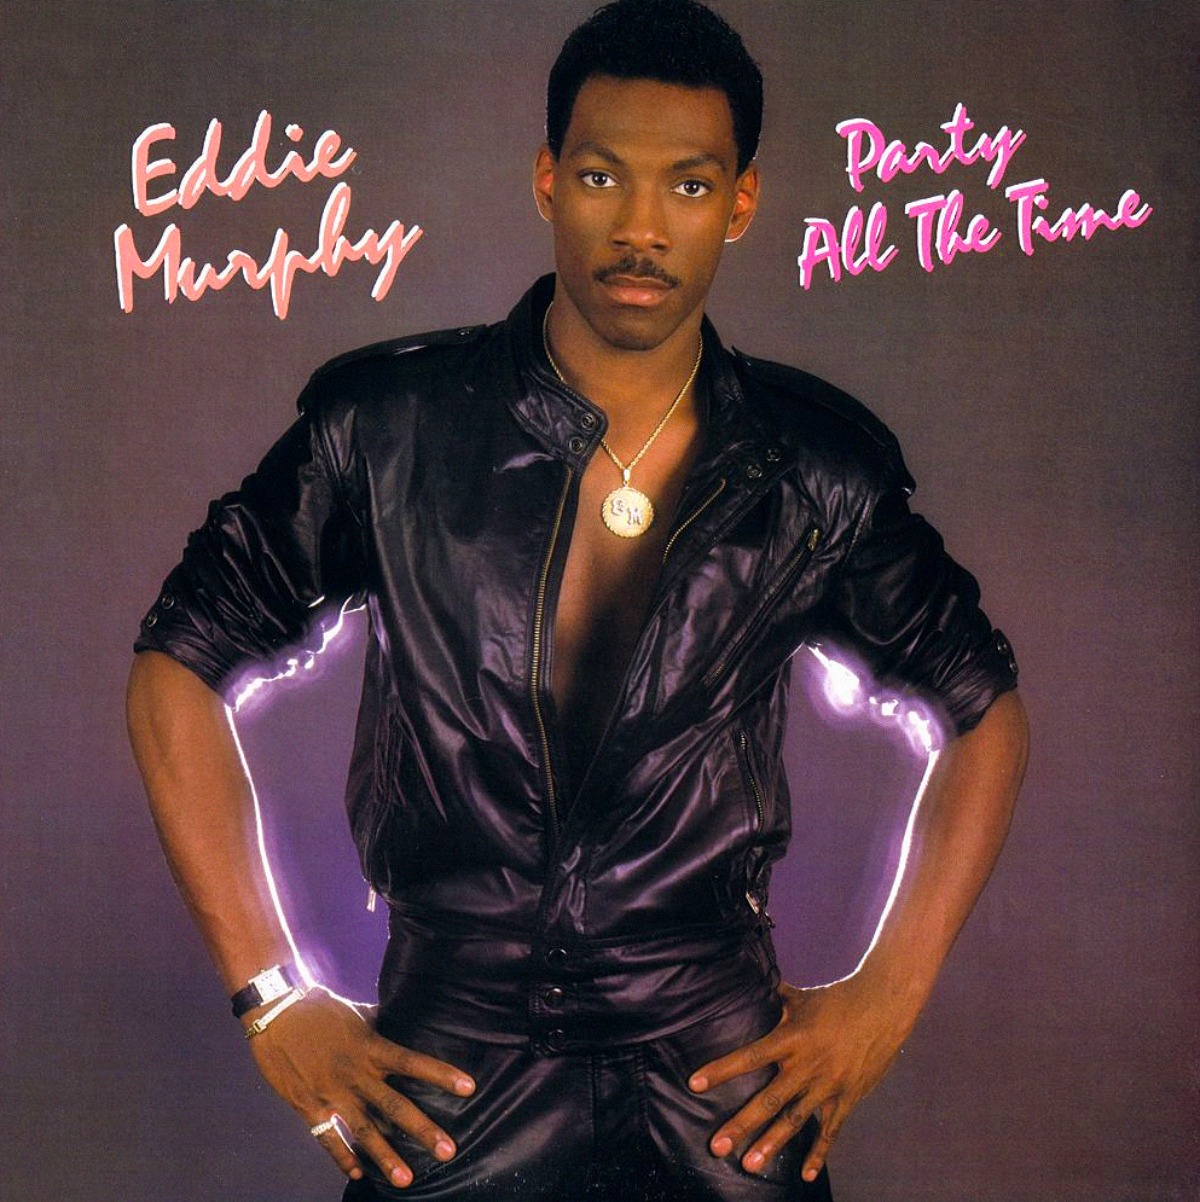 Reprise du single d'Eddie Murphy "Party All the Time".